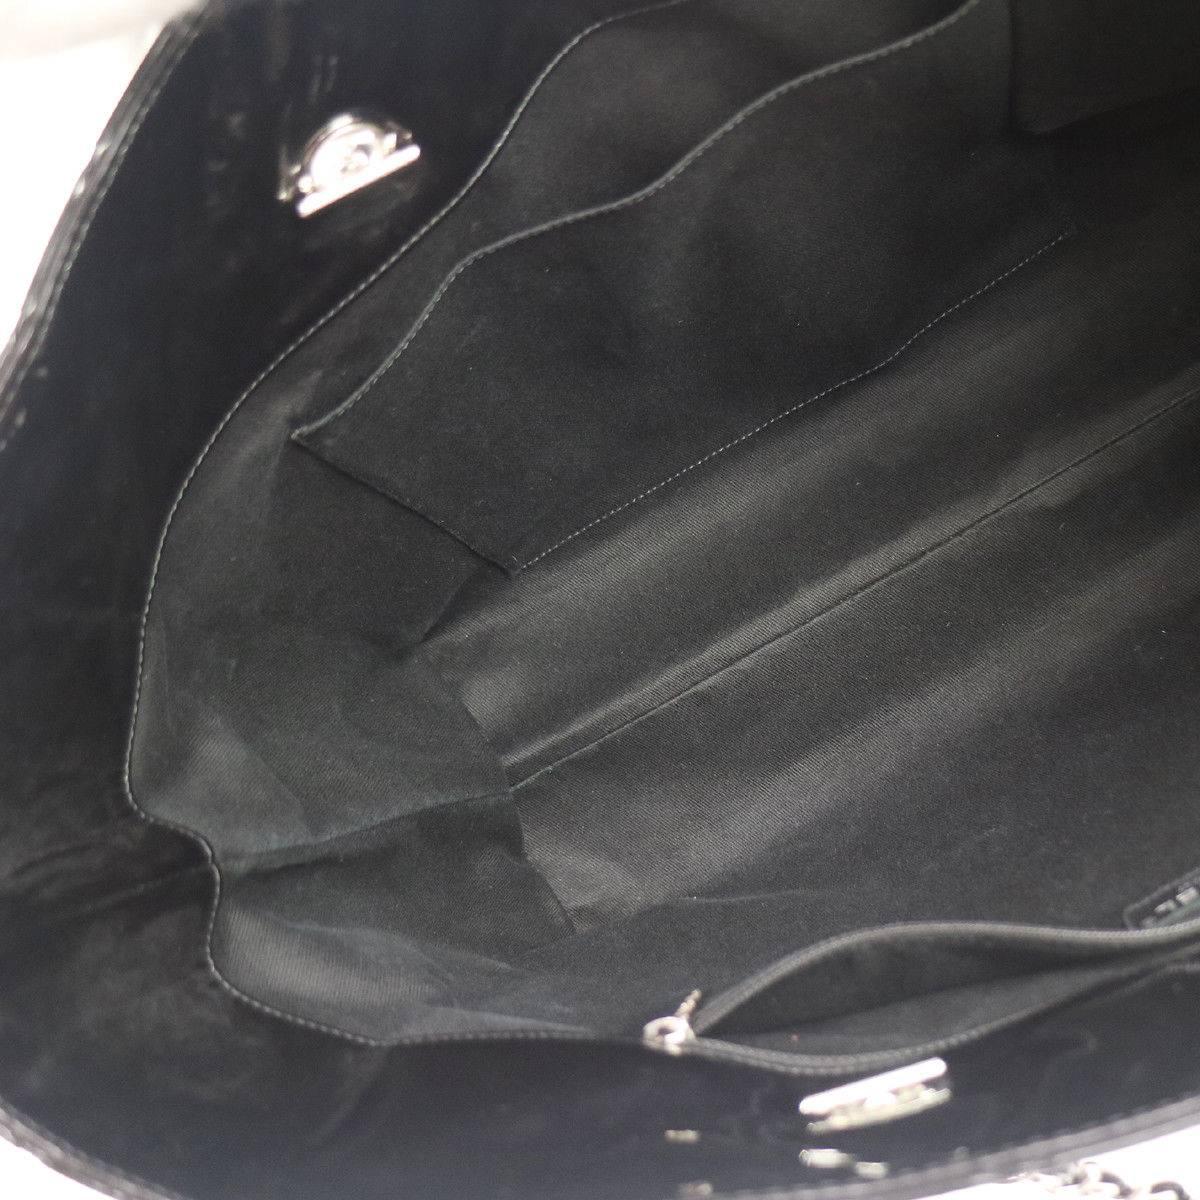 Chanel Black Patent Silver Large Carryall Travel Shopper Bag 2